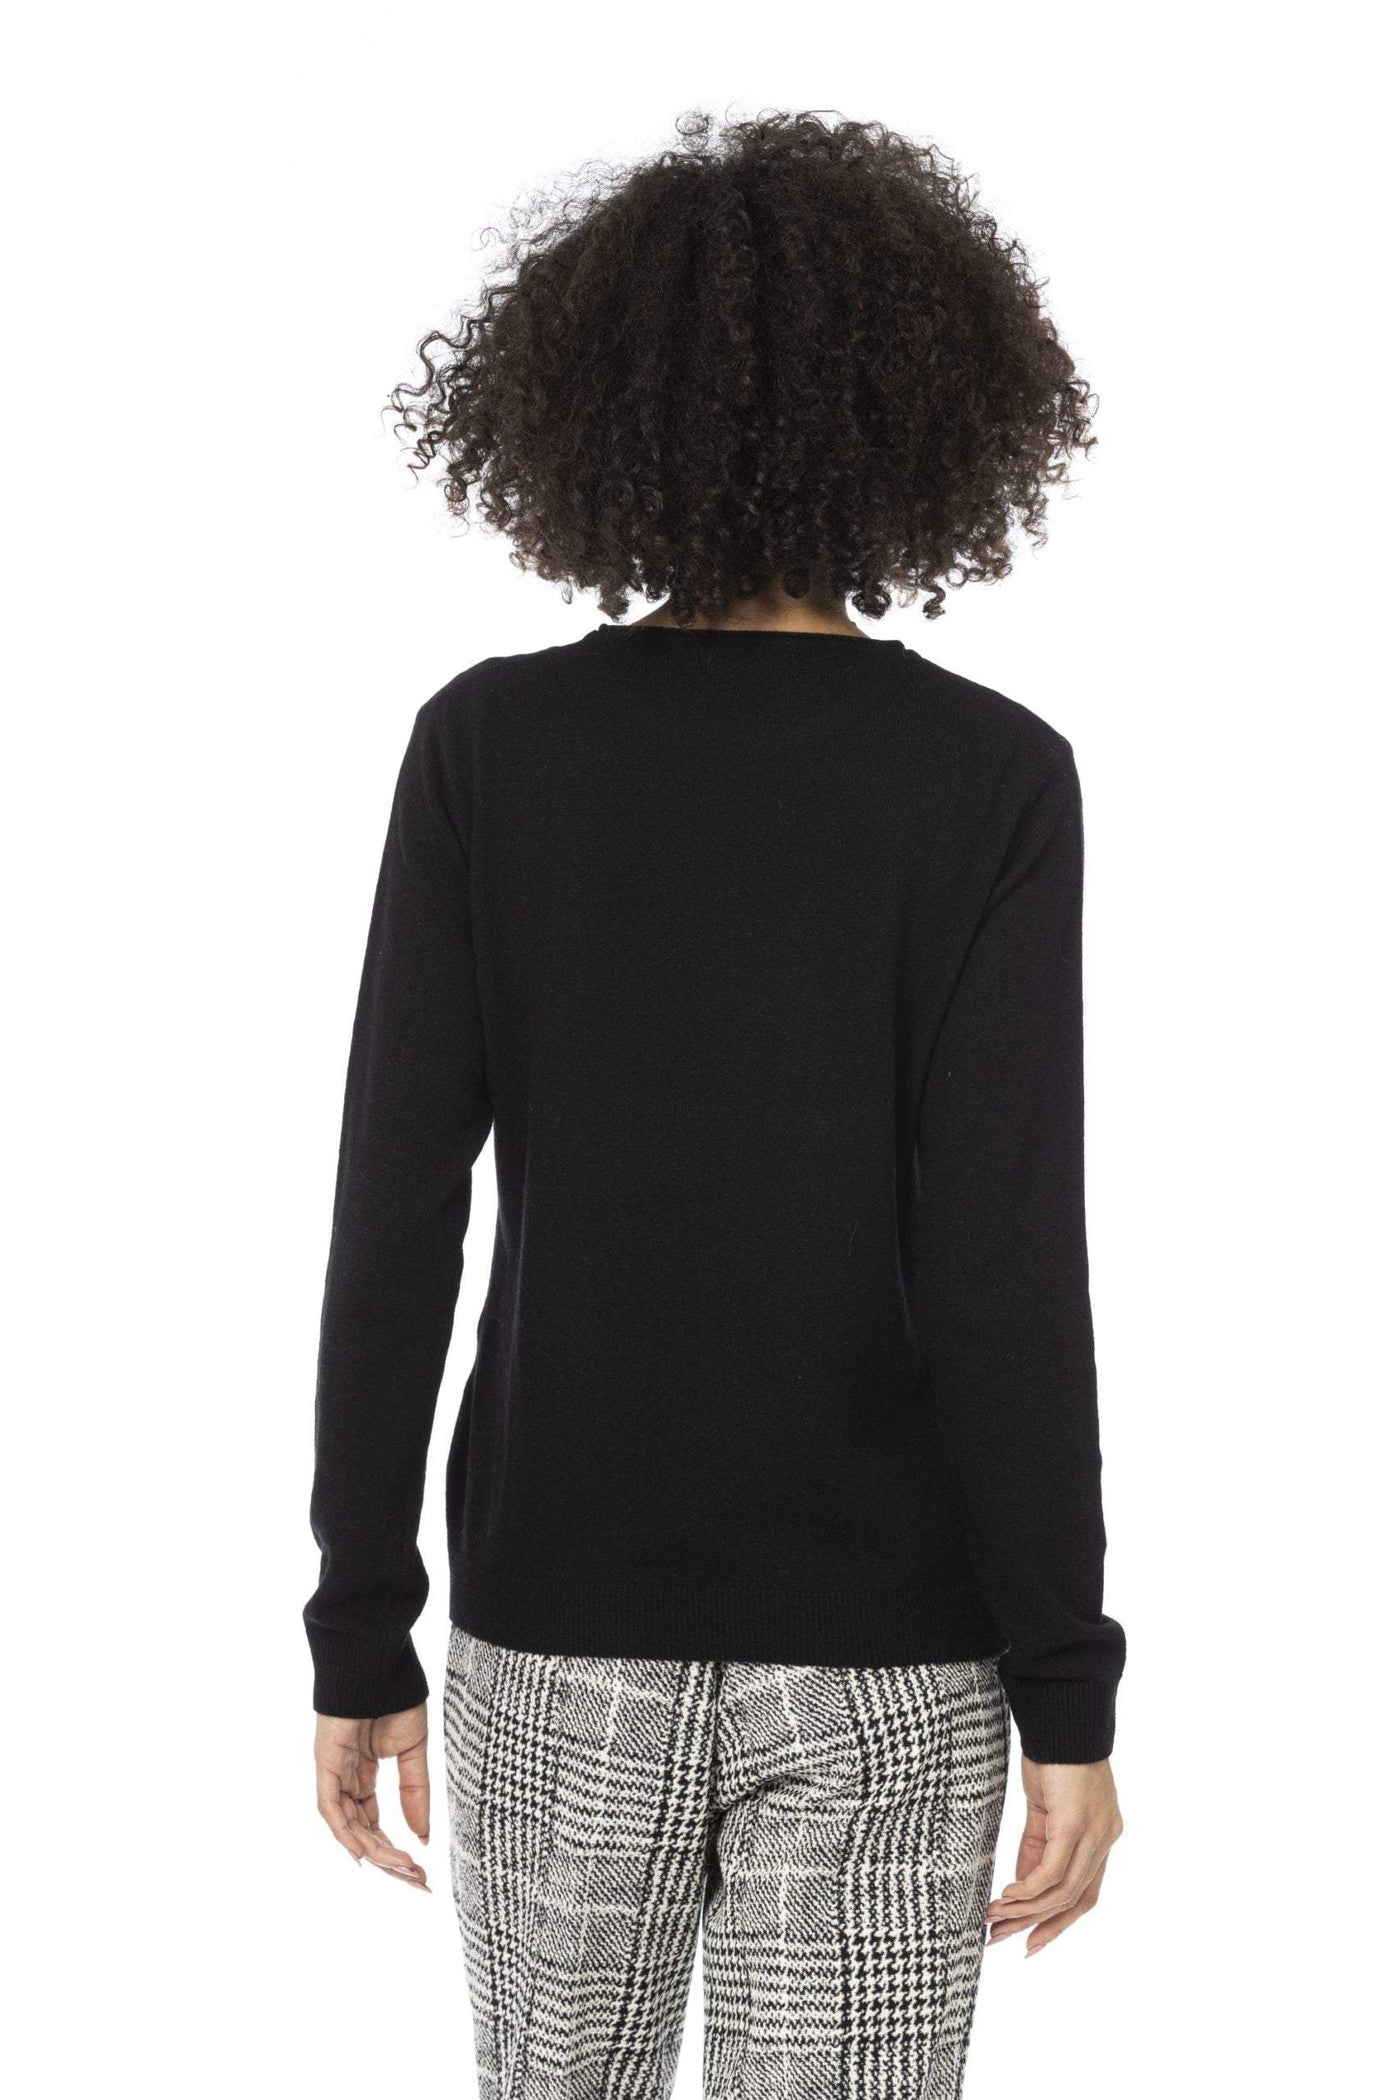 Baldinini Trend Black Wool Sweater Baldinini Trend, Black, feed-1, L, M, S, Sweaters - Women - Clothing, XL at SEYMAYKA